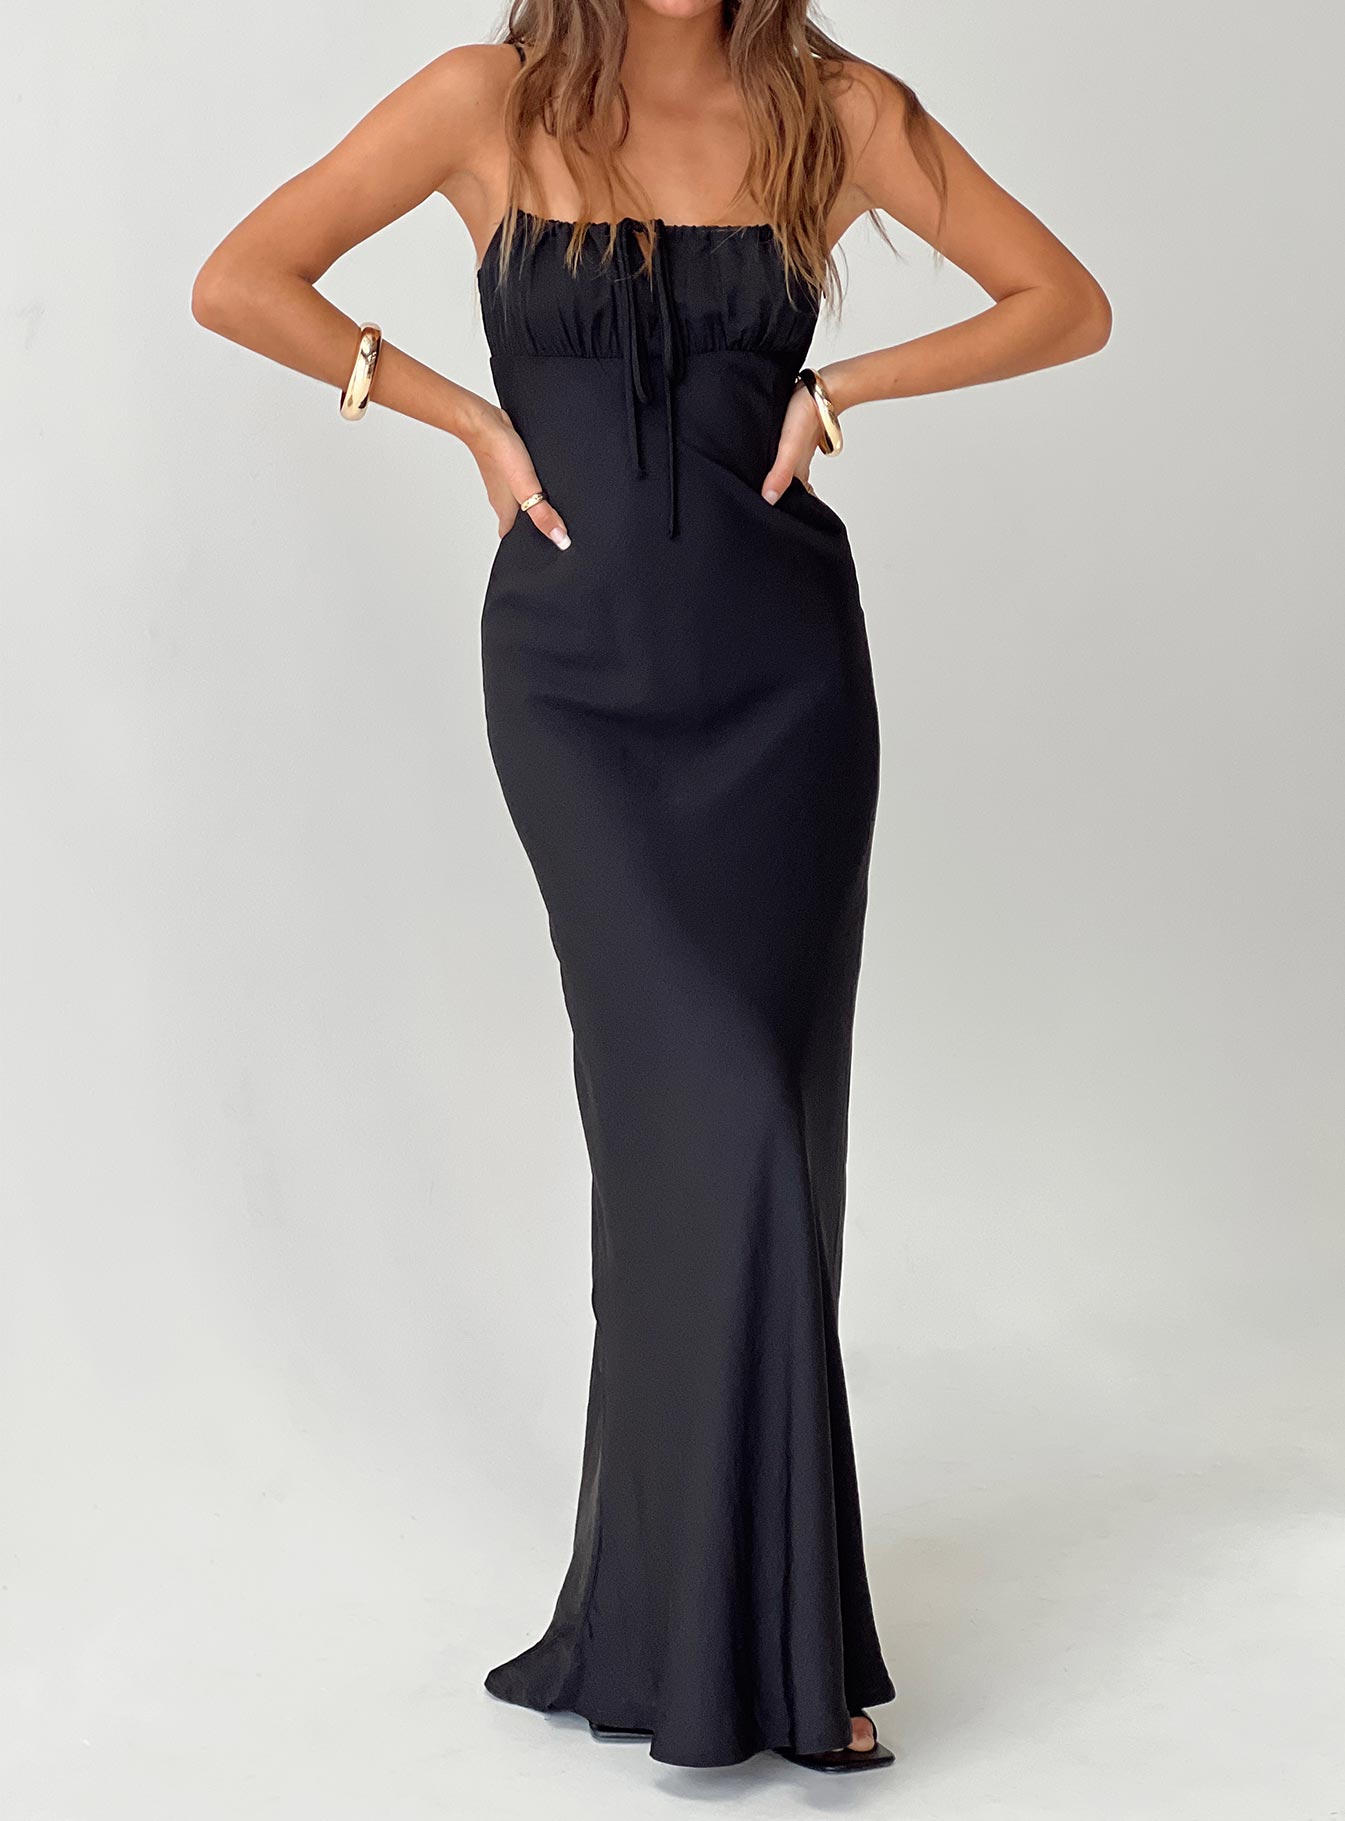 Shop Formal Dress - Noda Maxi Dress Black fourth image